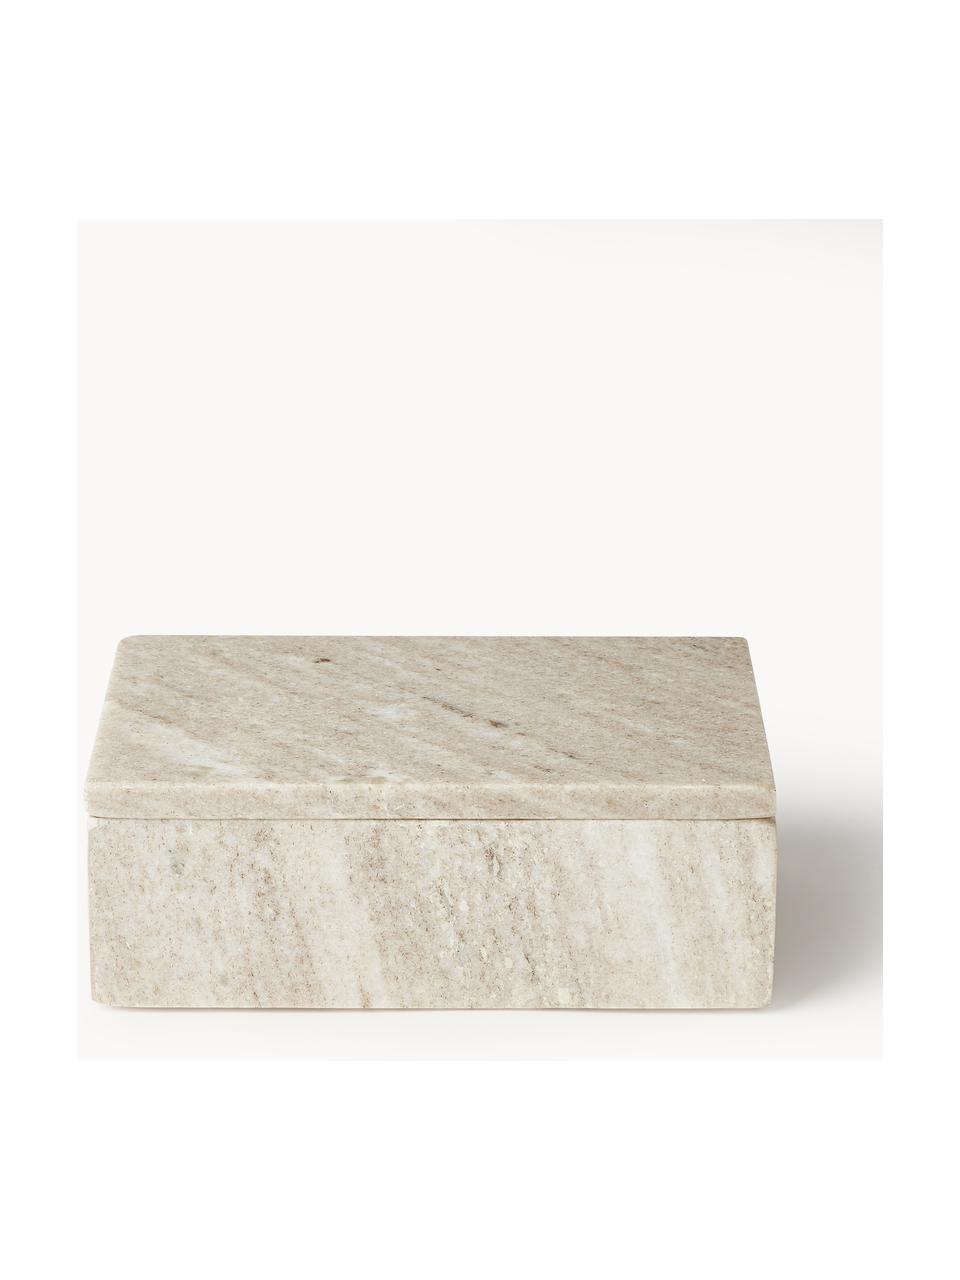 Marmor-Schmuckkästchen Venice, Marmor, Beige, marmoriert, B 20 x H 7 cm